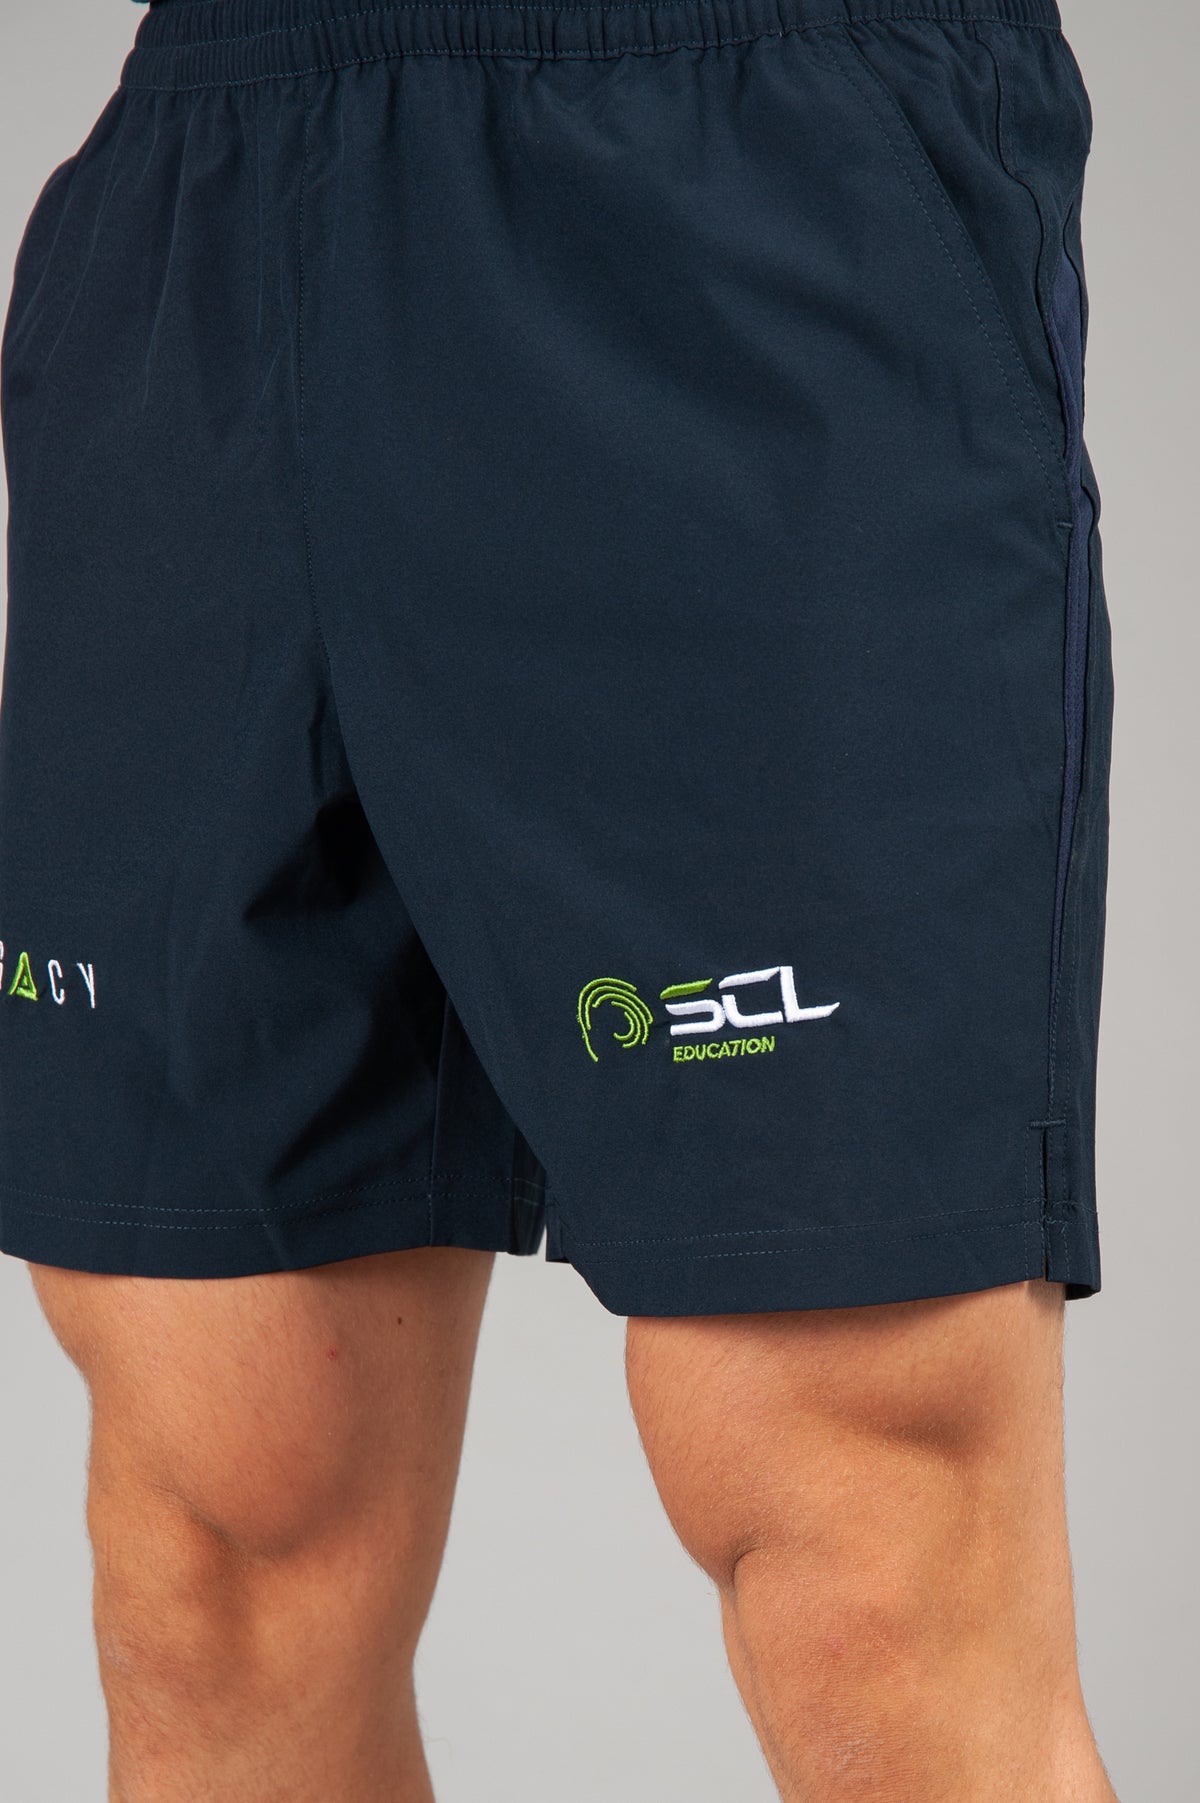 SCL Education Training Shorts